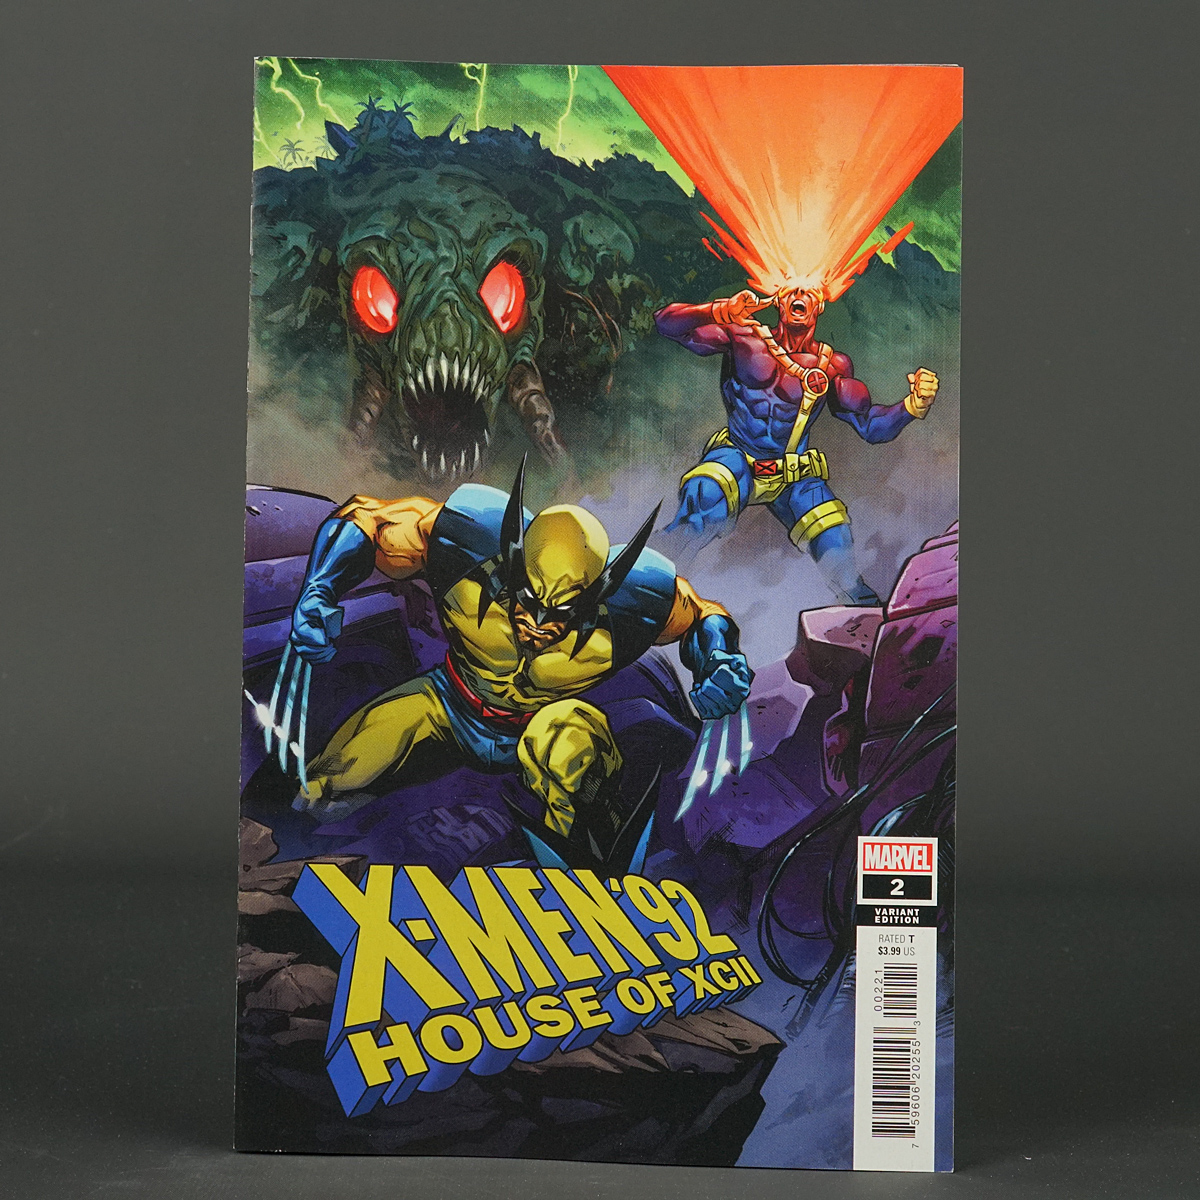 X-Men 92 HOUSE OF XCII #2 var Marvel Comics 2022 MAR220999 (CA) Manna (W) Foxe